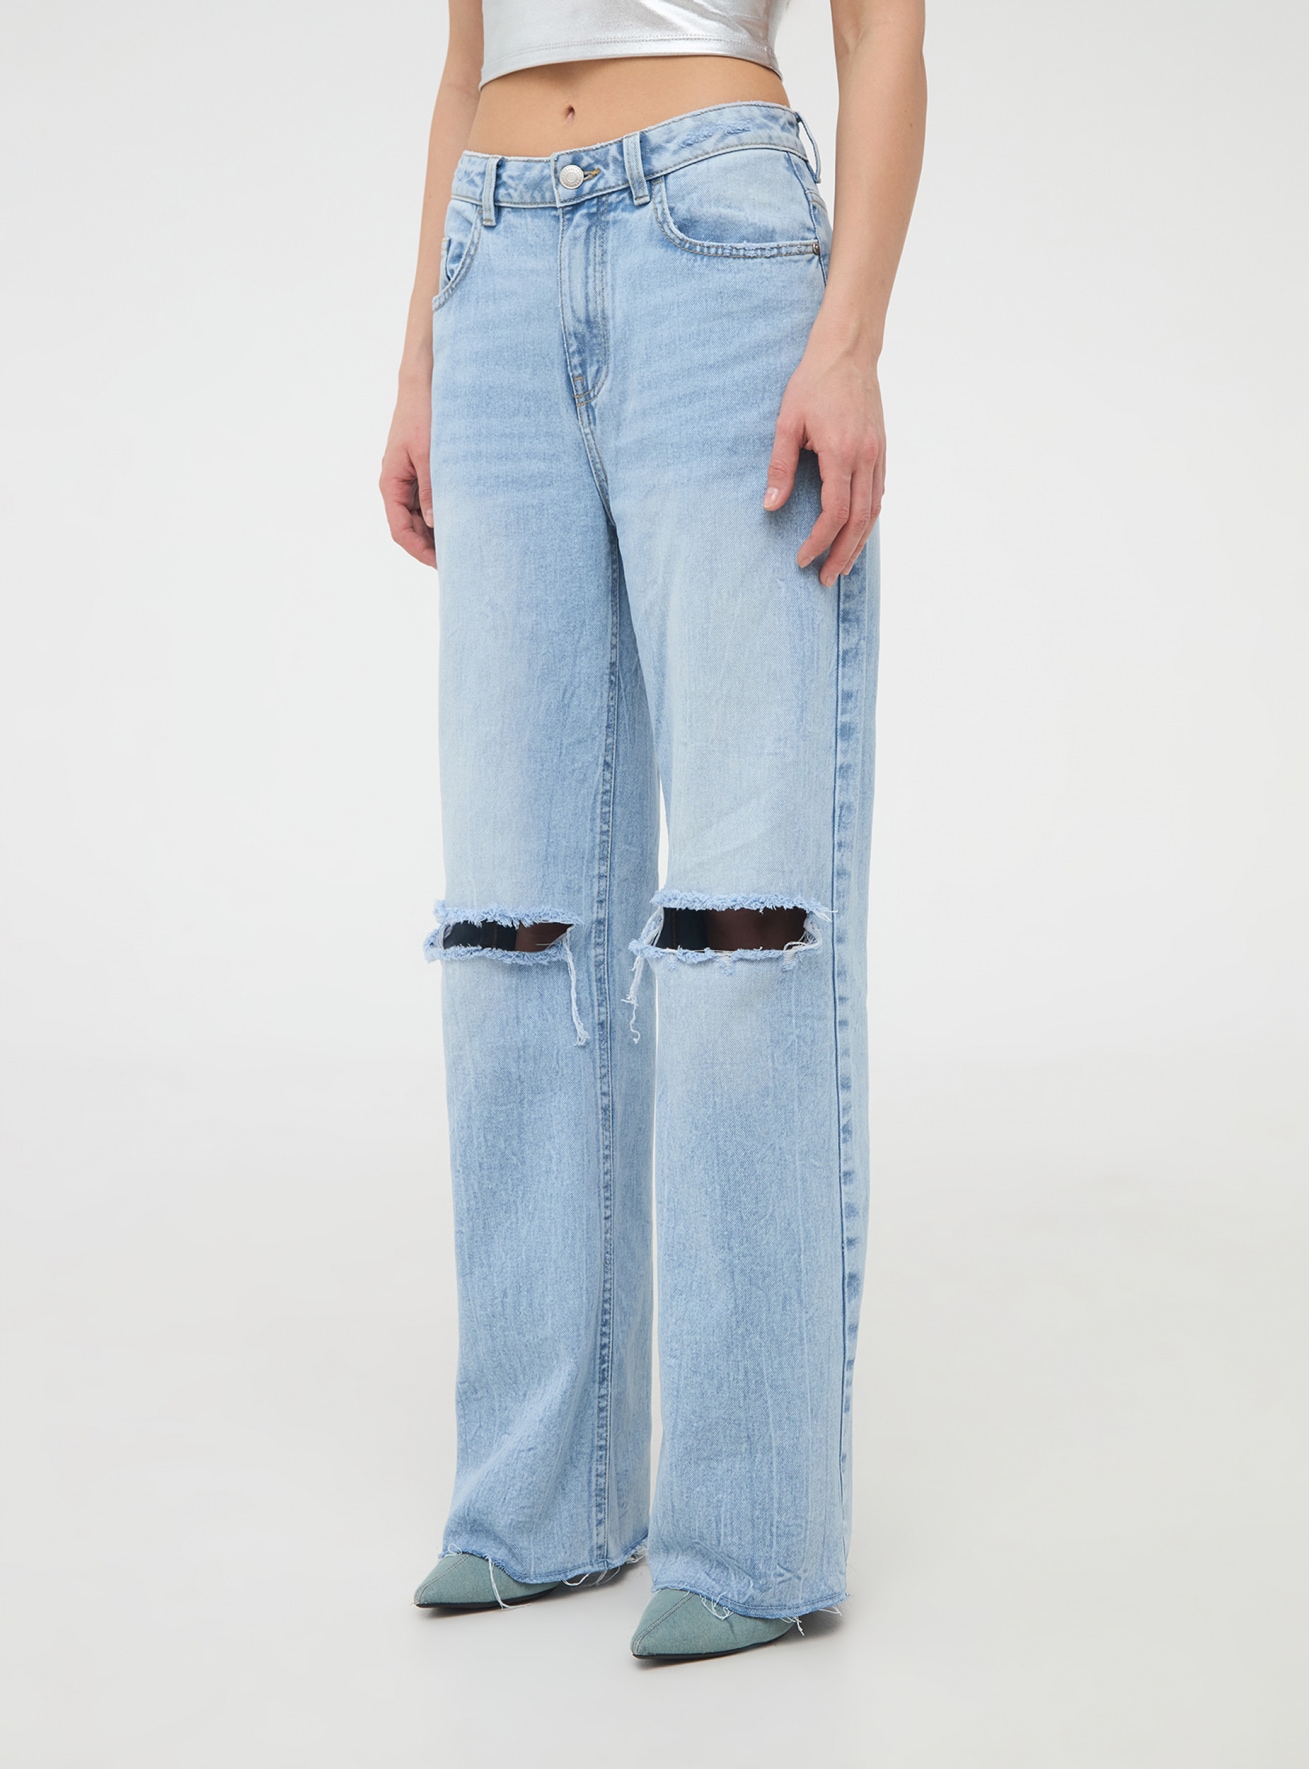 Pantalone Jeans Lungo Donna Terranova